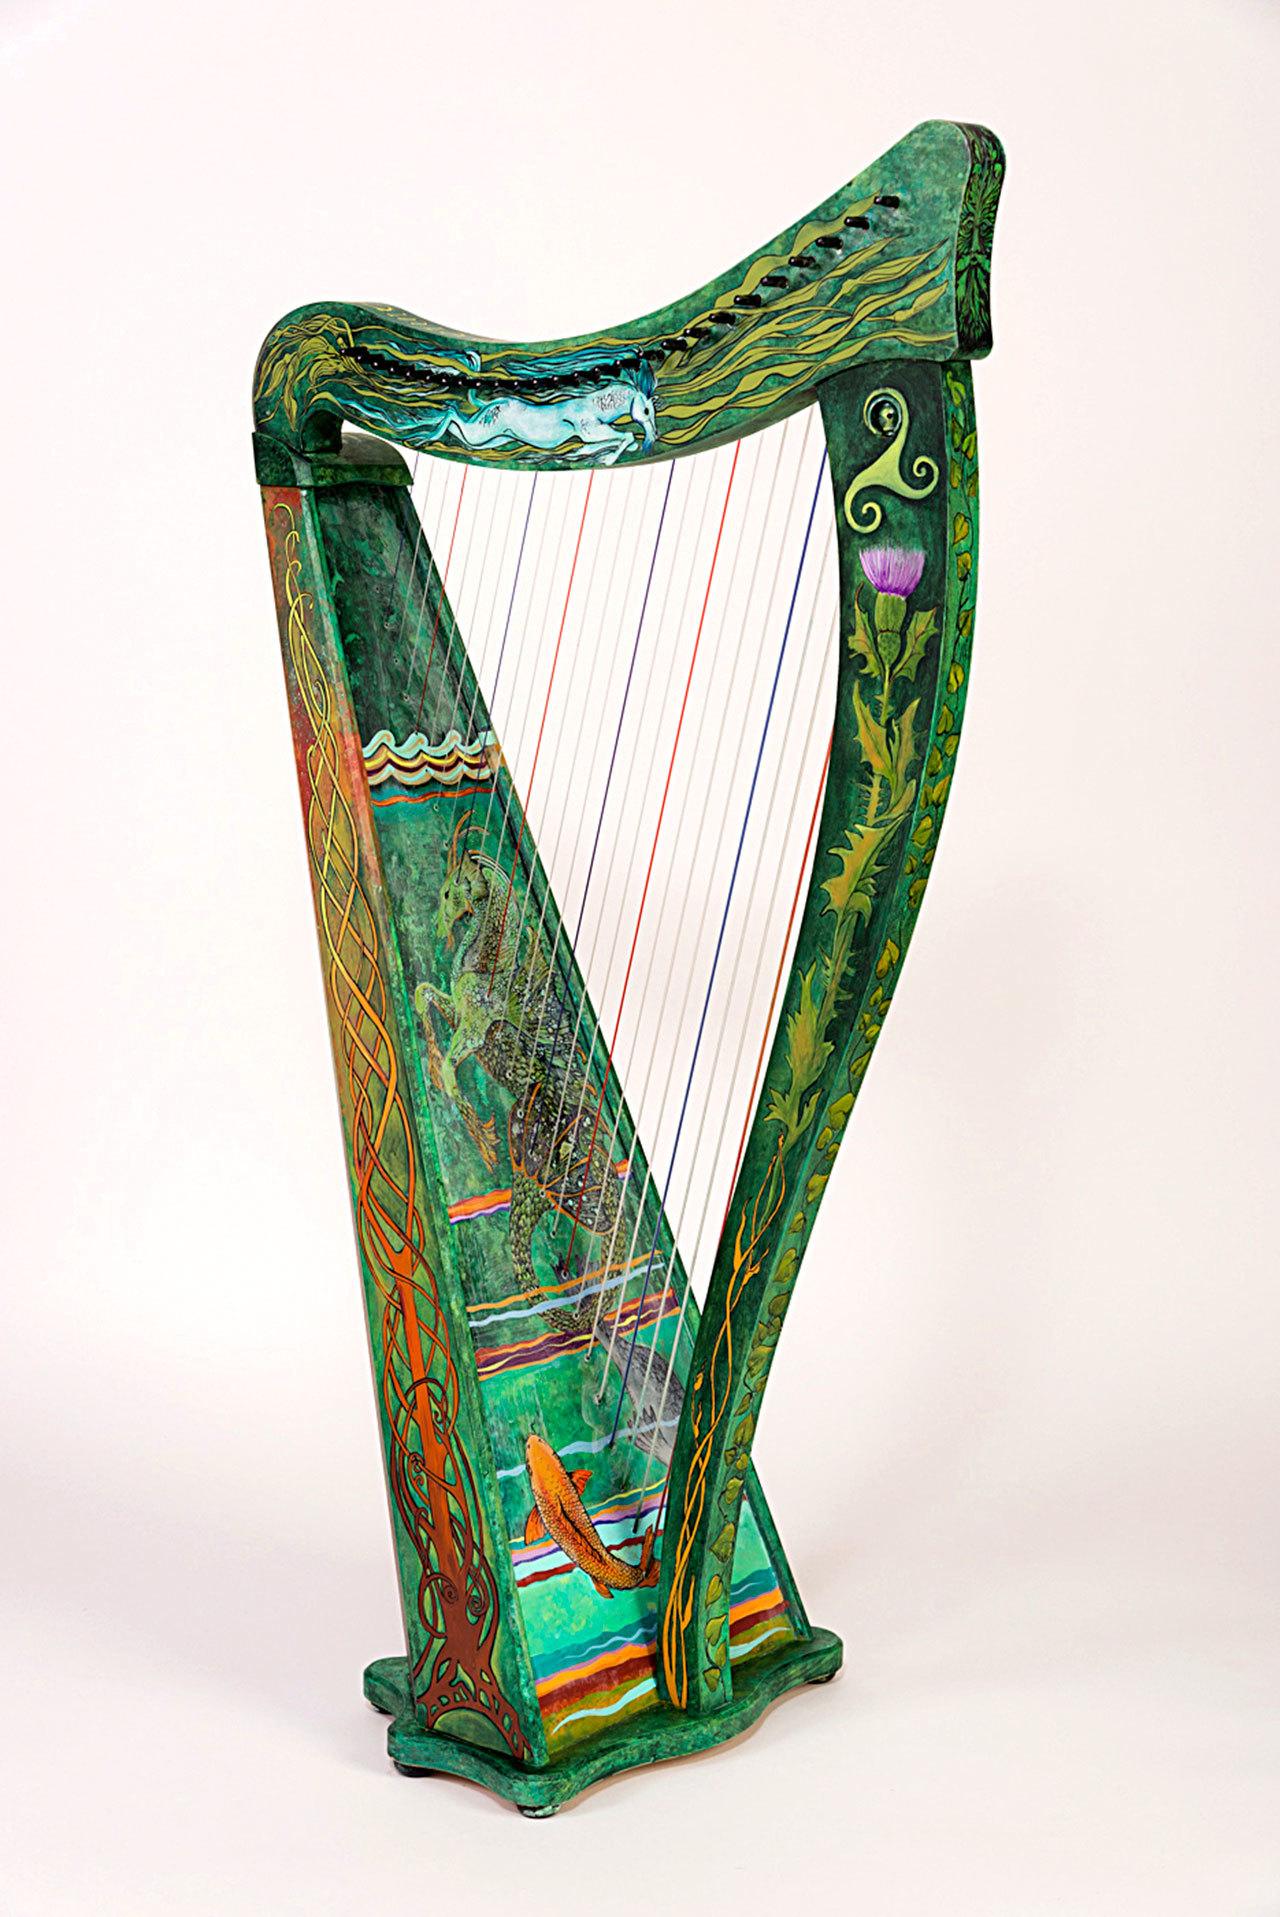 MarchFourth, instrument auction to raise funds for Juan de Fuca Festival